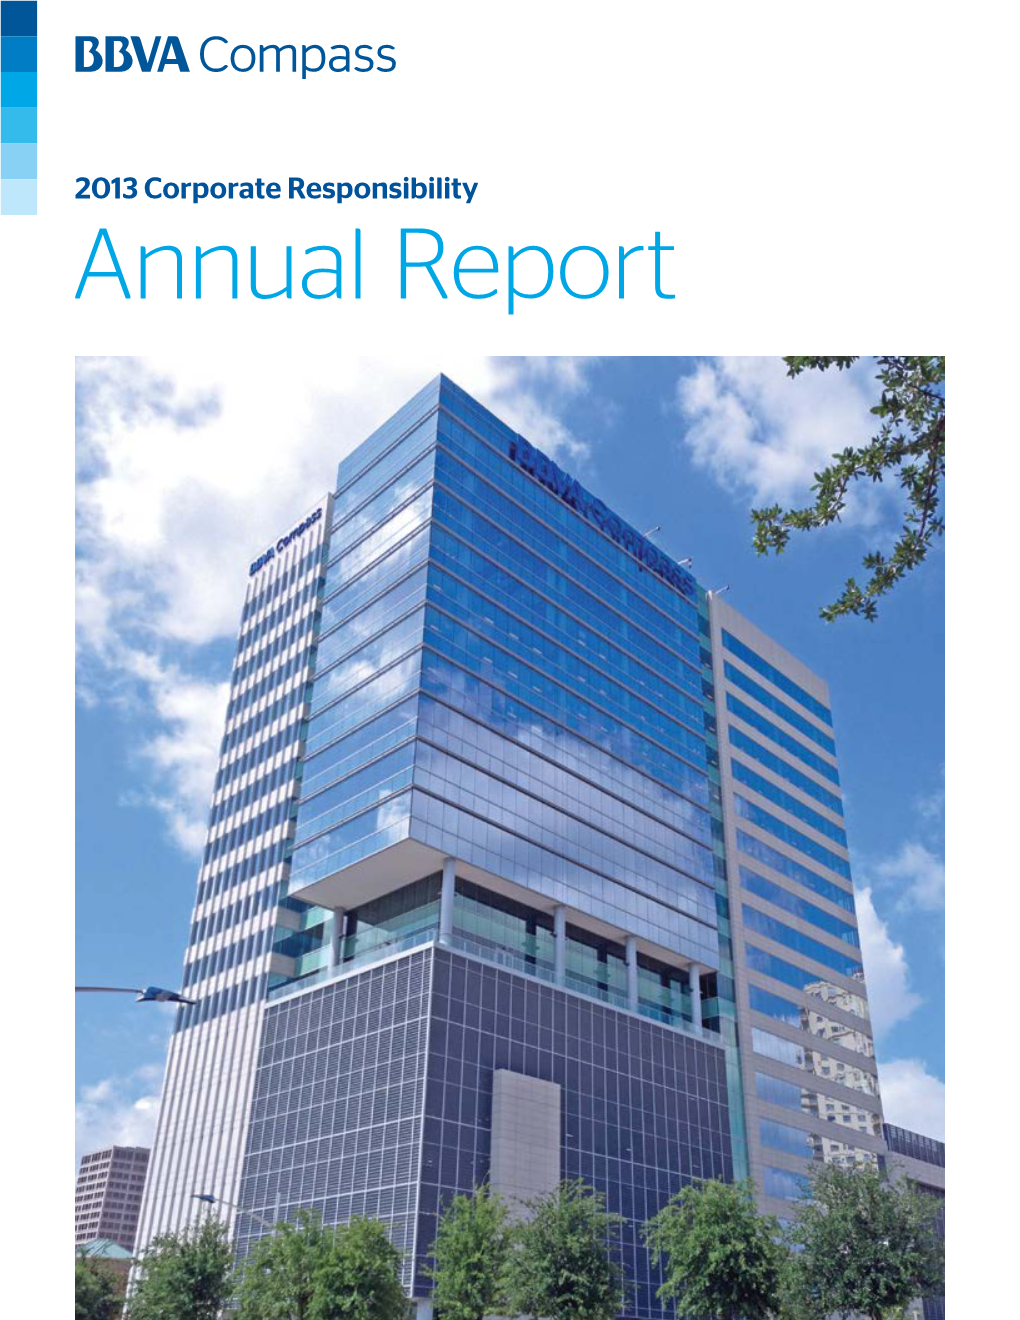 2013 BBVA Corporate Responsibility Annual Report